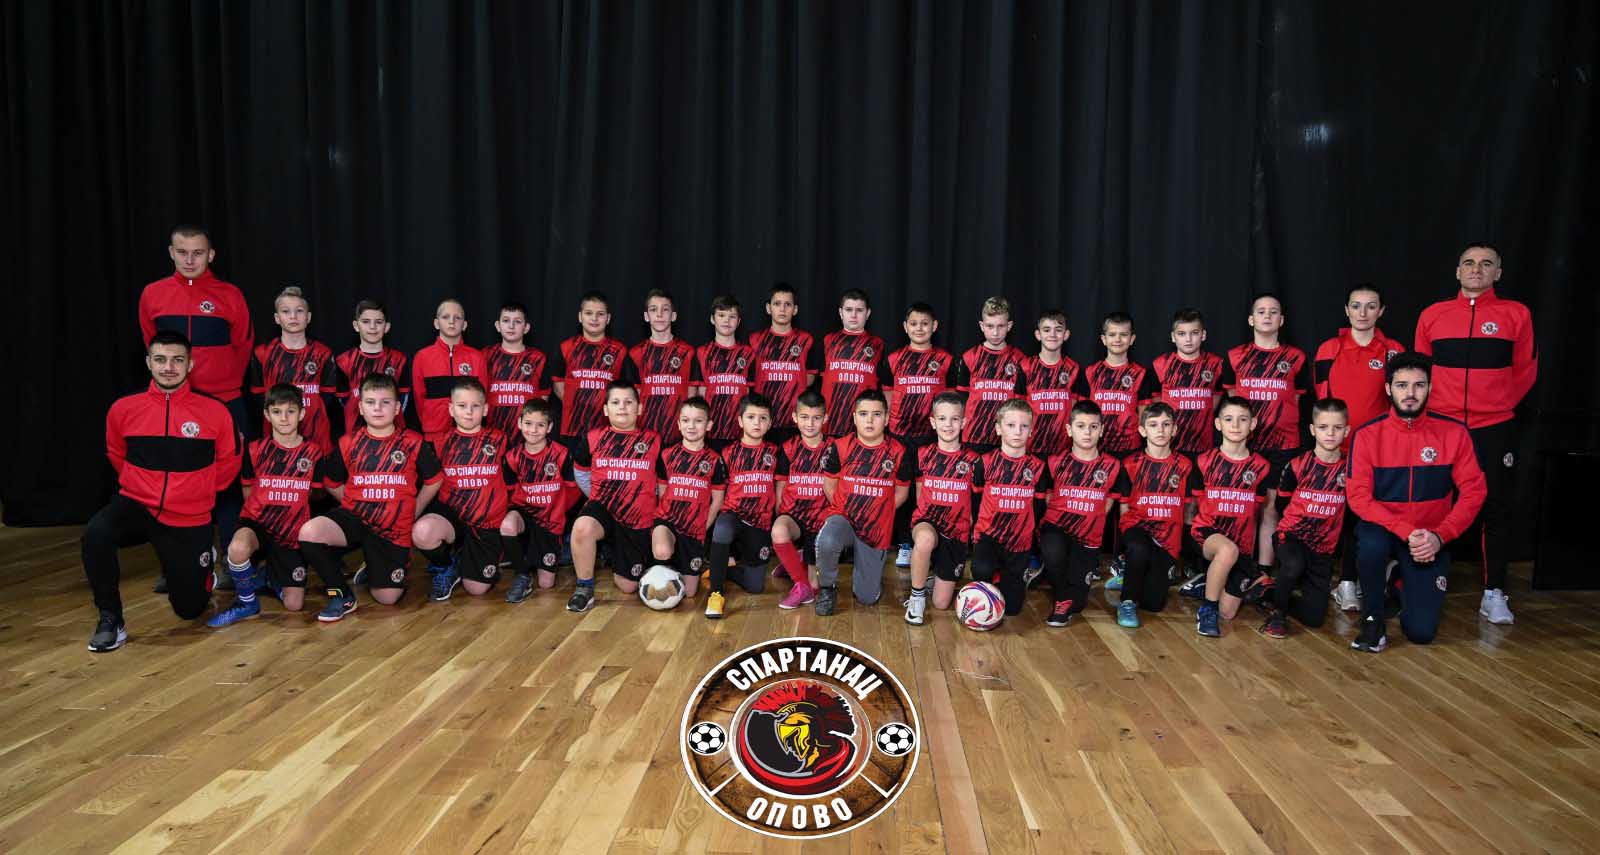 Škola fudbala Spartanac: Upis novih članova, pozovite i pridružite se